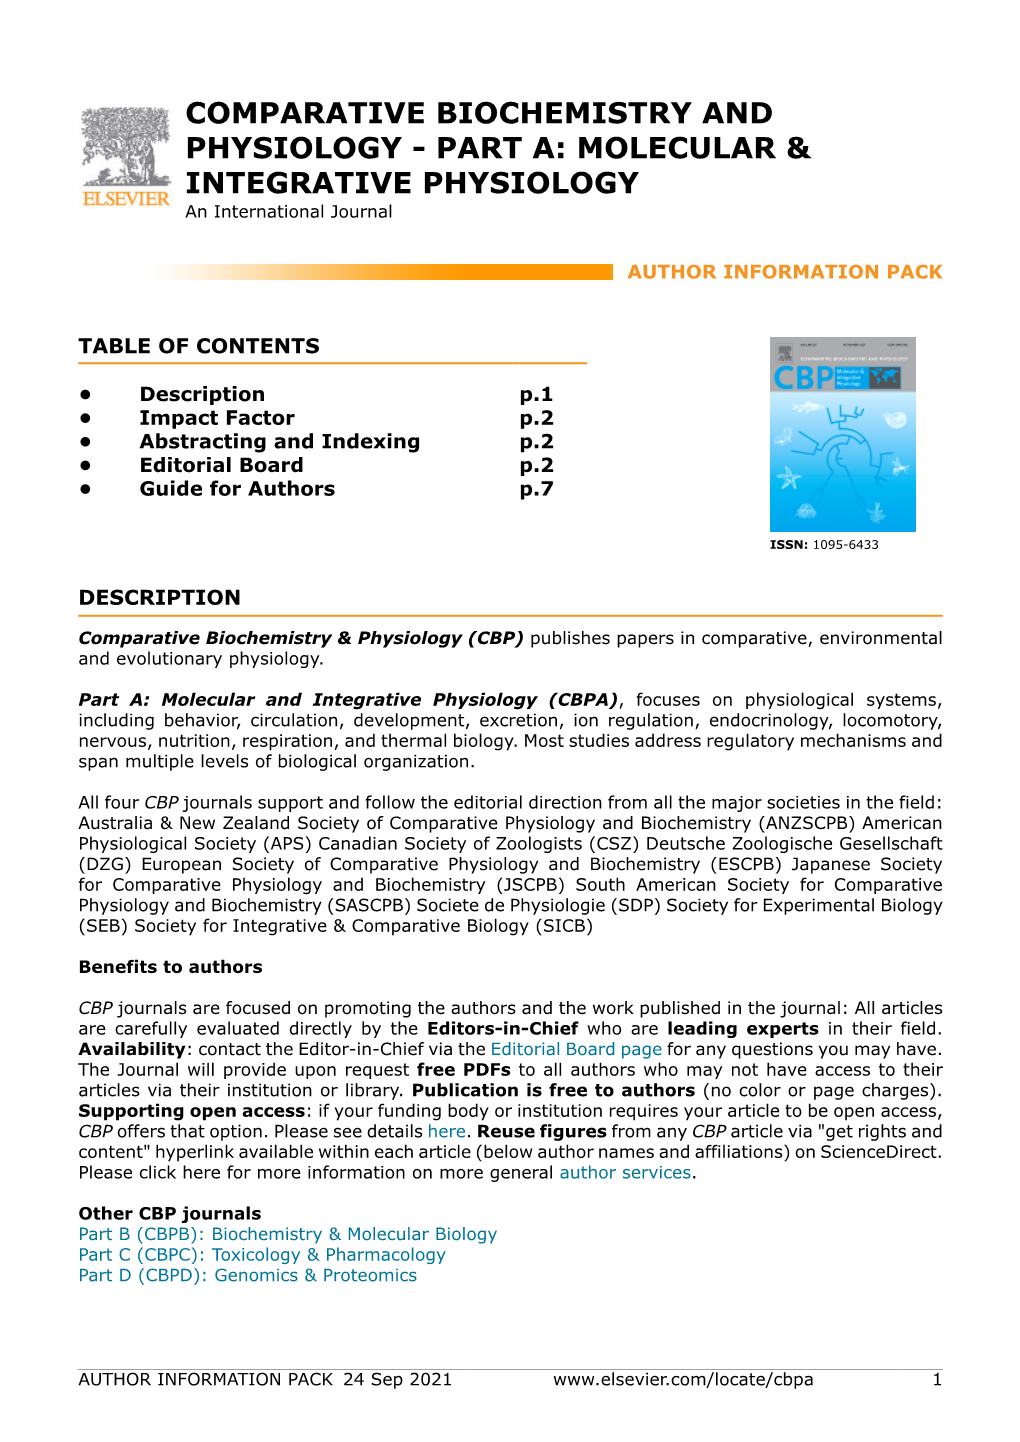 COMPARATIVE BIOCHEMISTRY and PHYSIOLOGY - PART A: MOLECULAR & INTEGRATIVE PHYSIOLOGY an International Journal